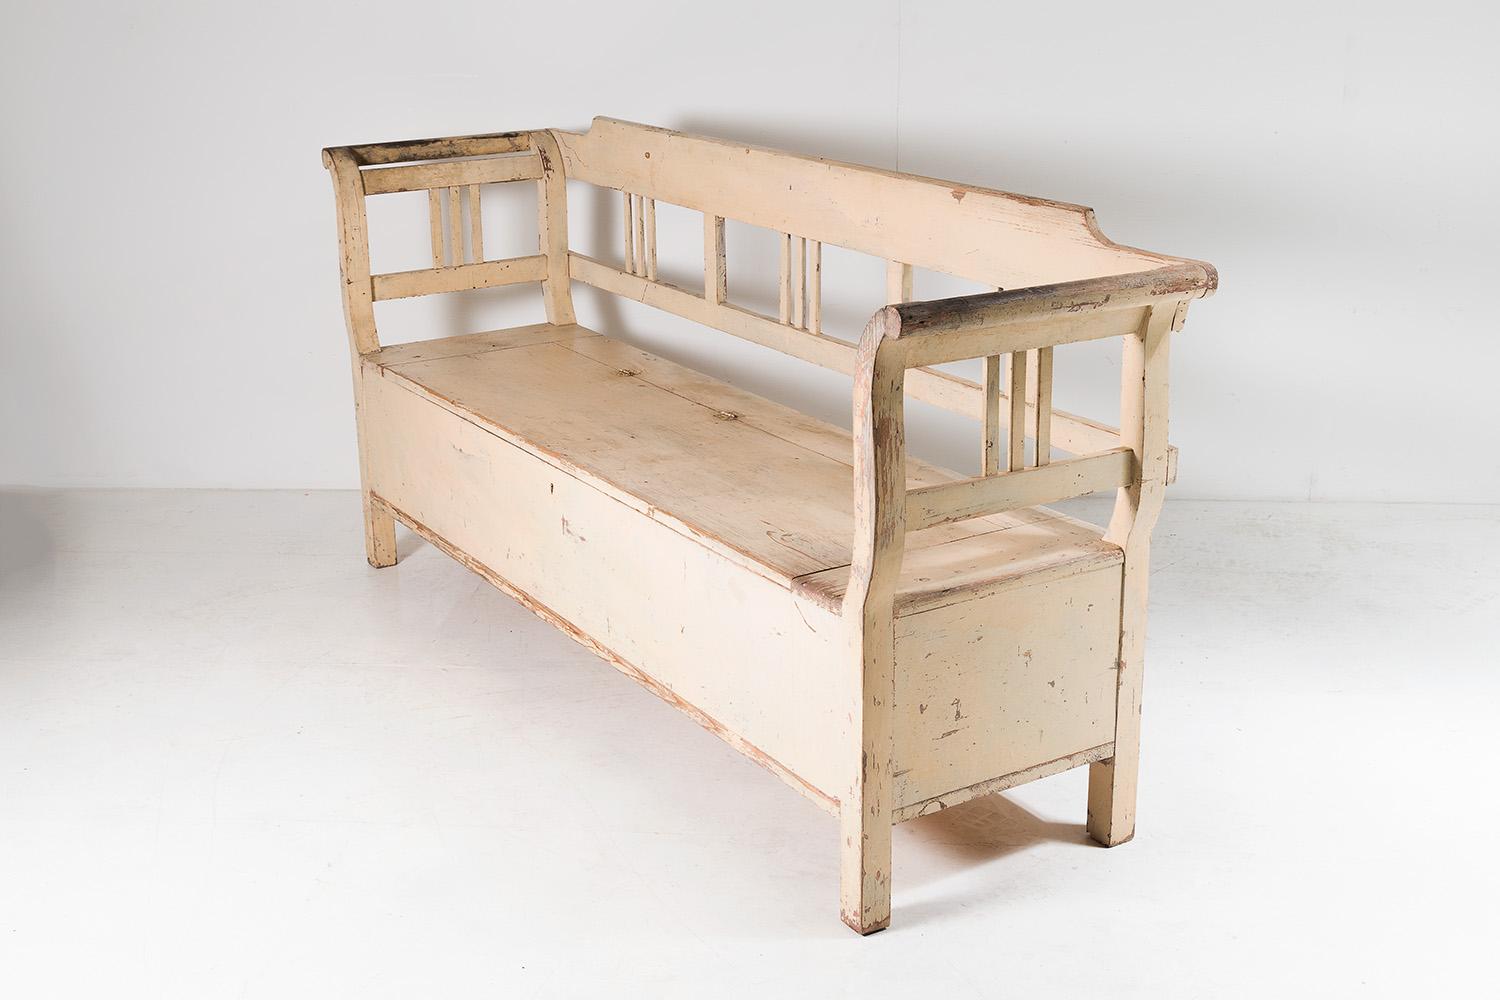 19th Century Original Painted Pine European Box Settle Farmhouse Bench Seat with Storage